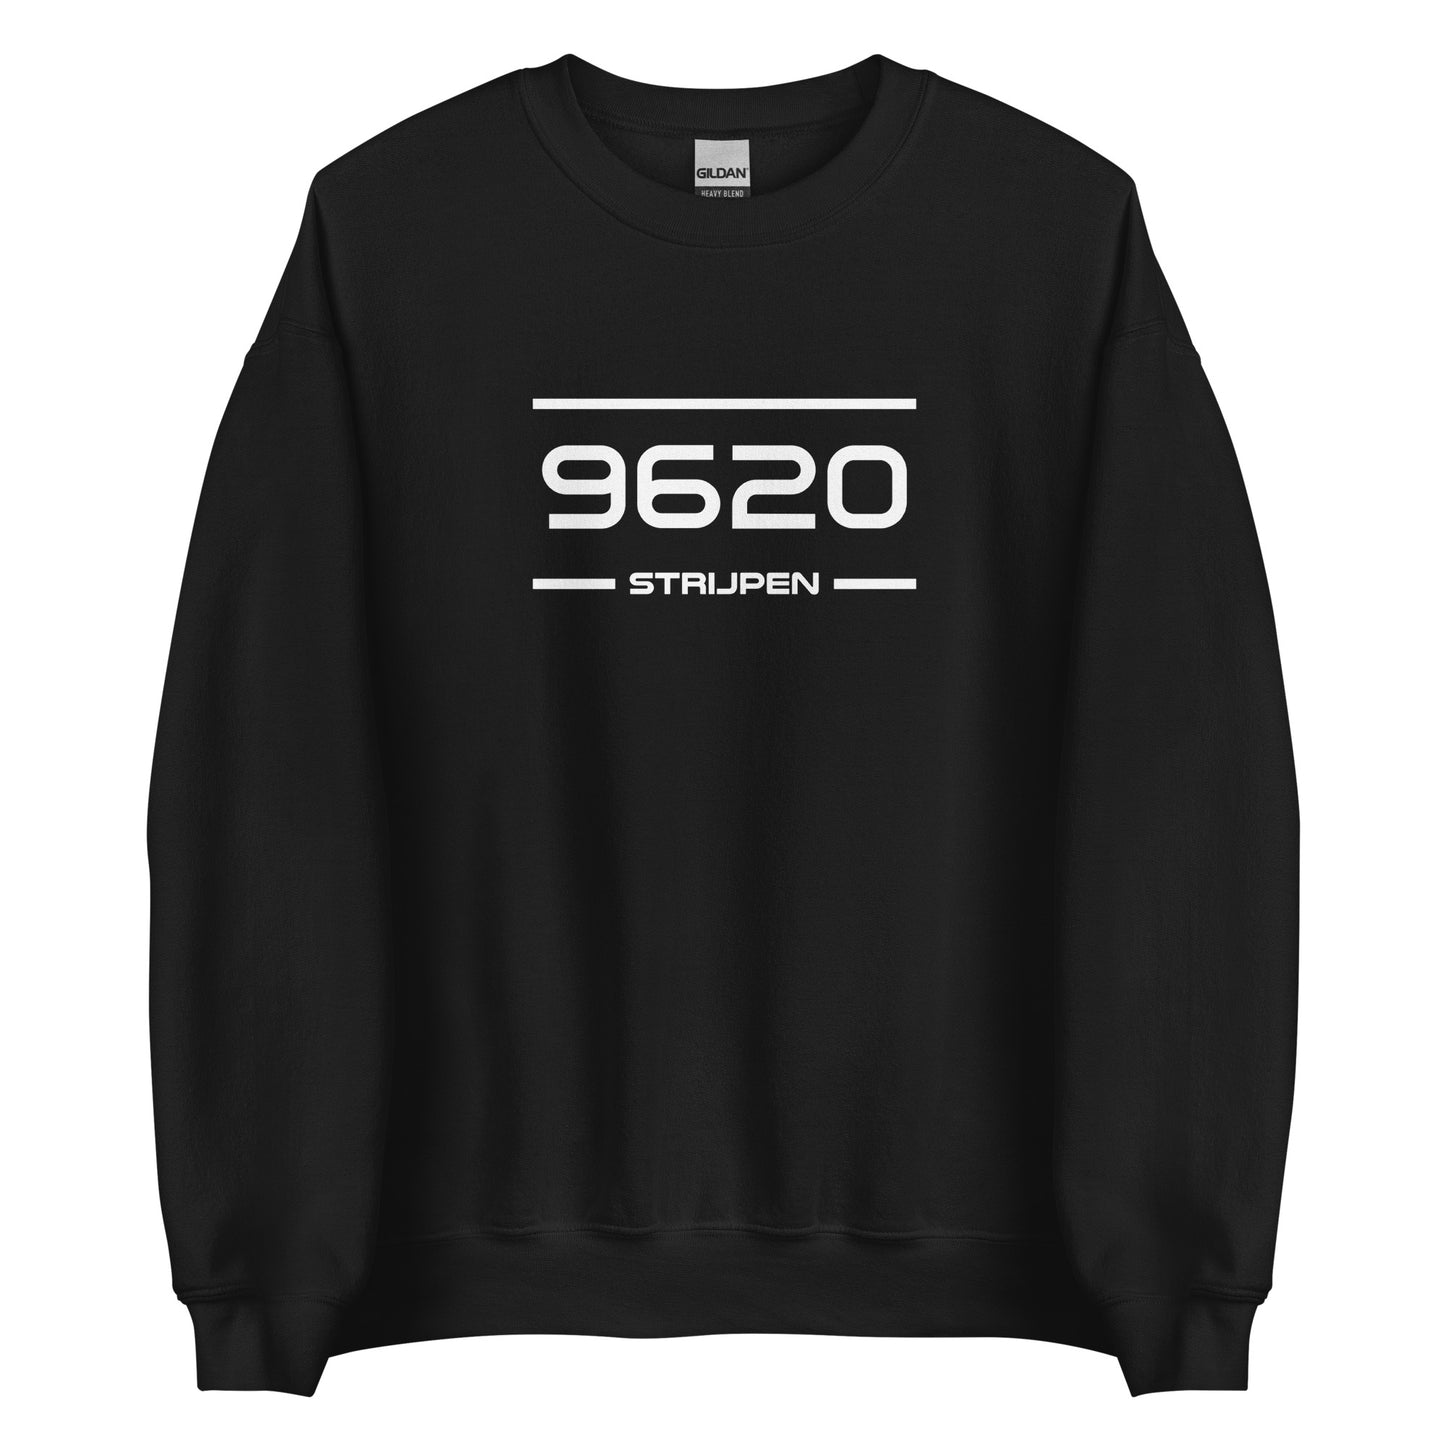 Sweater - 9620 - Strijpen (M/V)